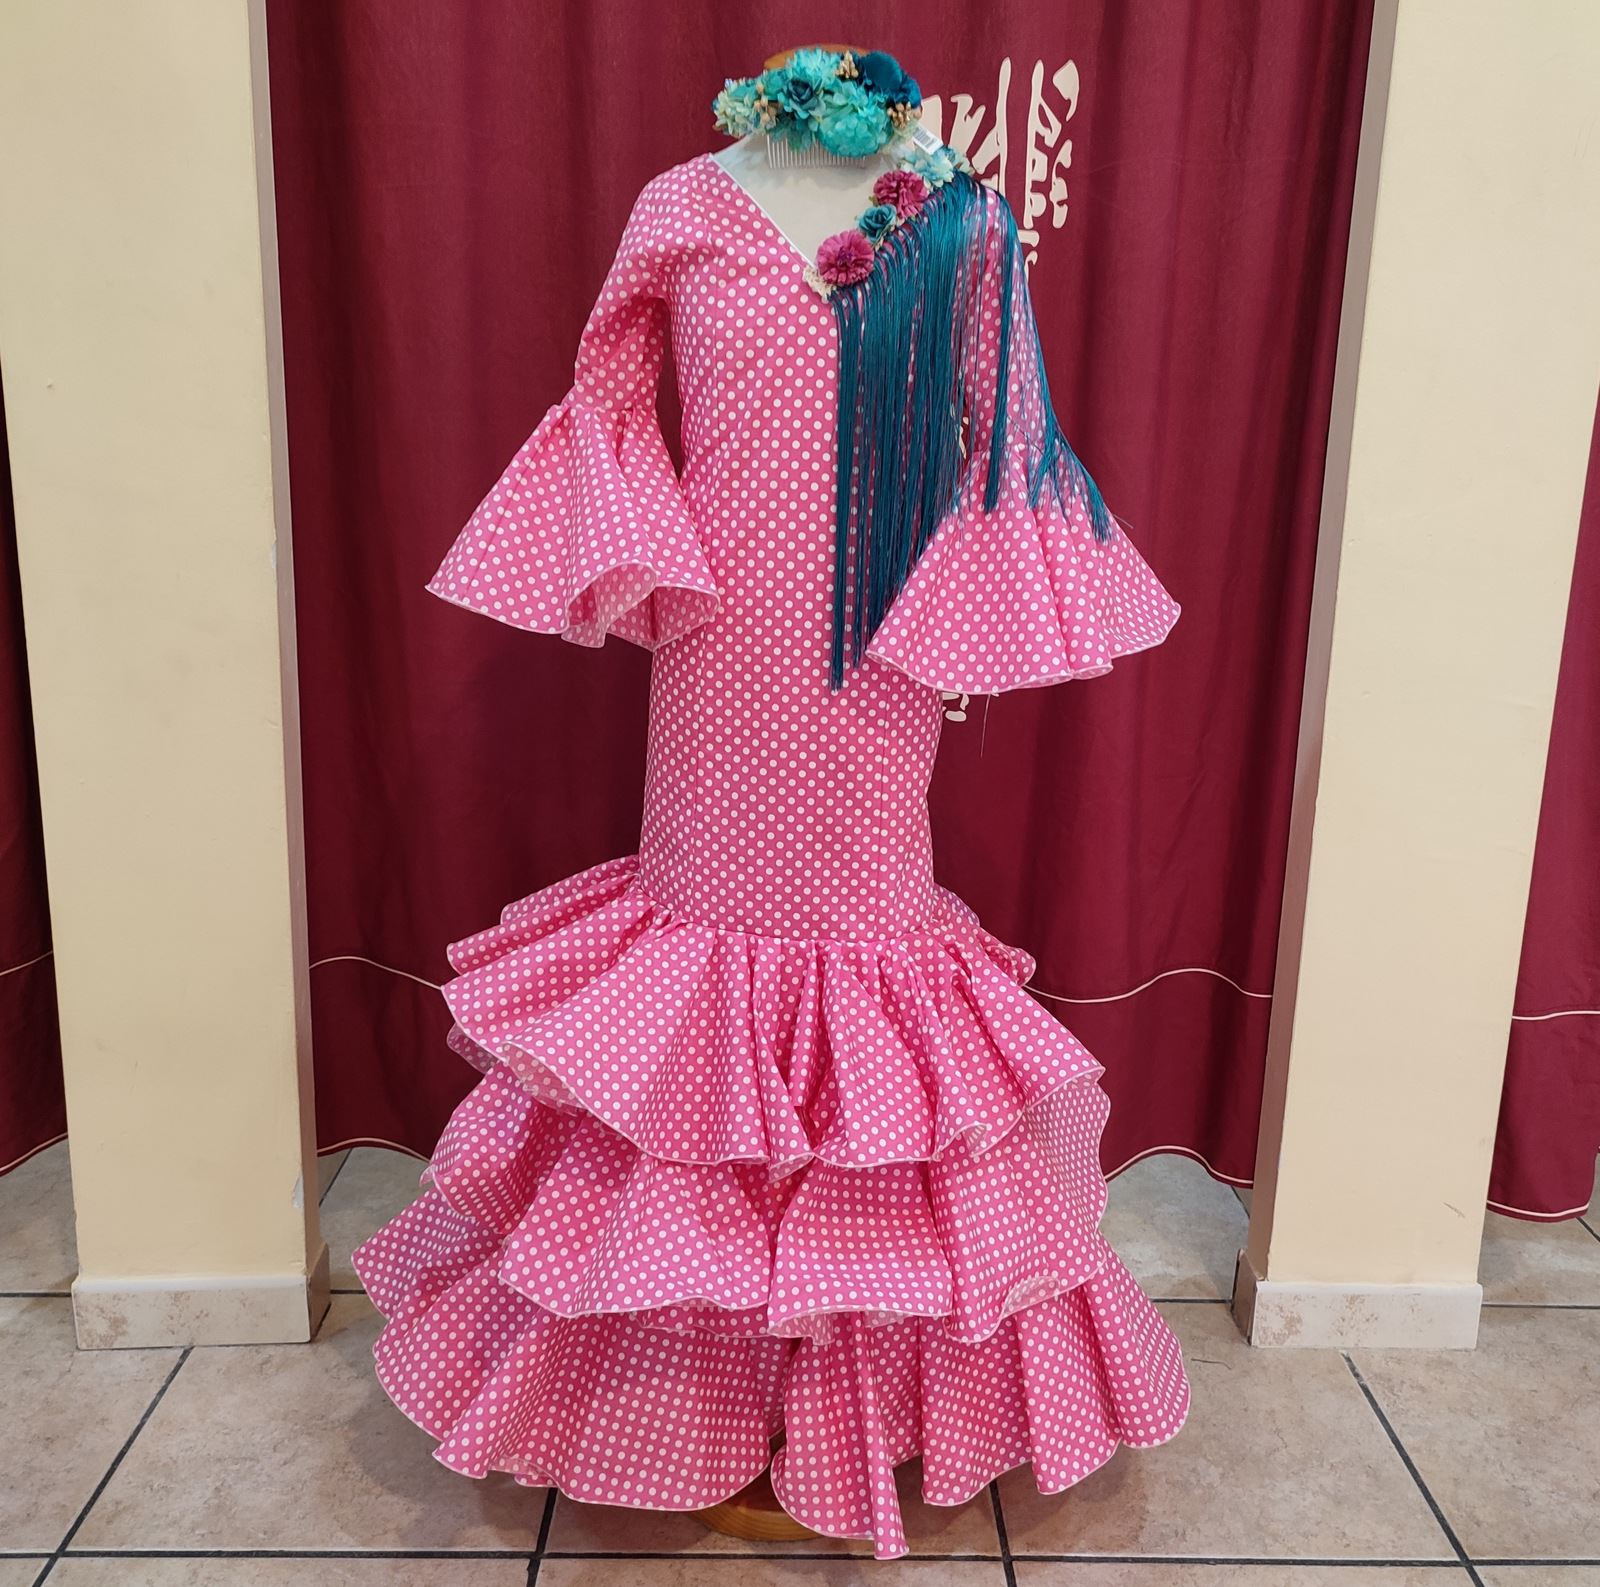 Vestido de Flamenca / Sevillana para Mujer Color Fucsia con Lunares